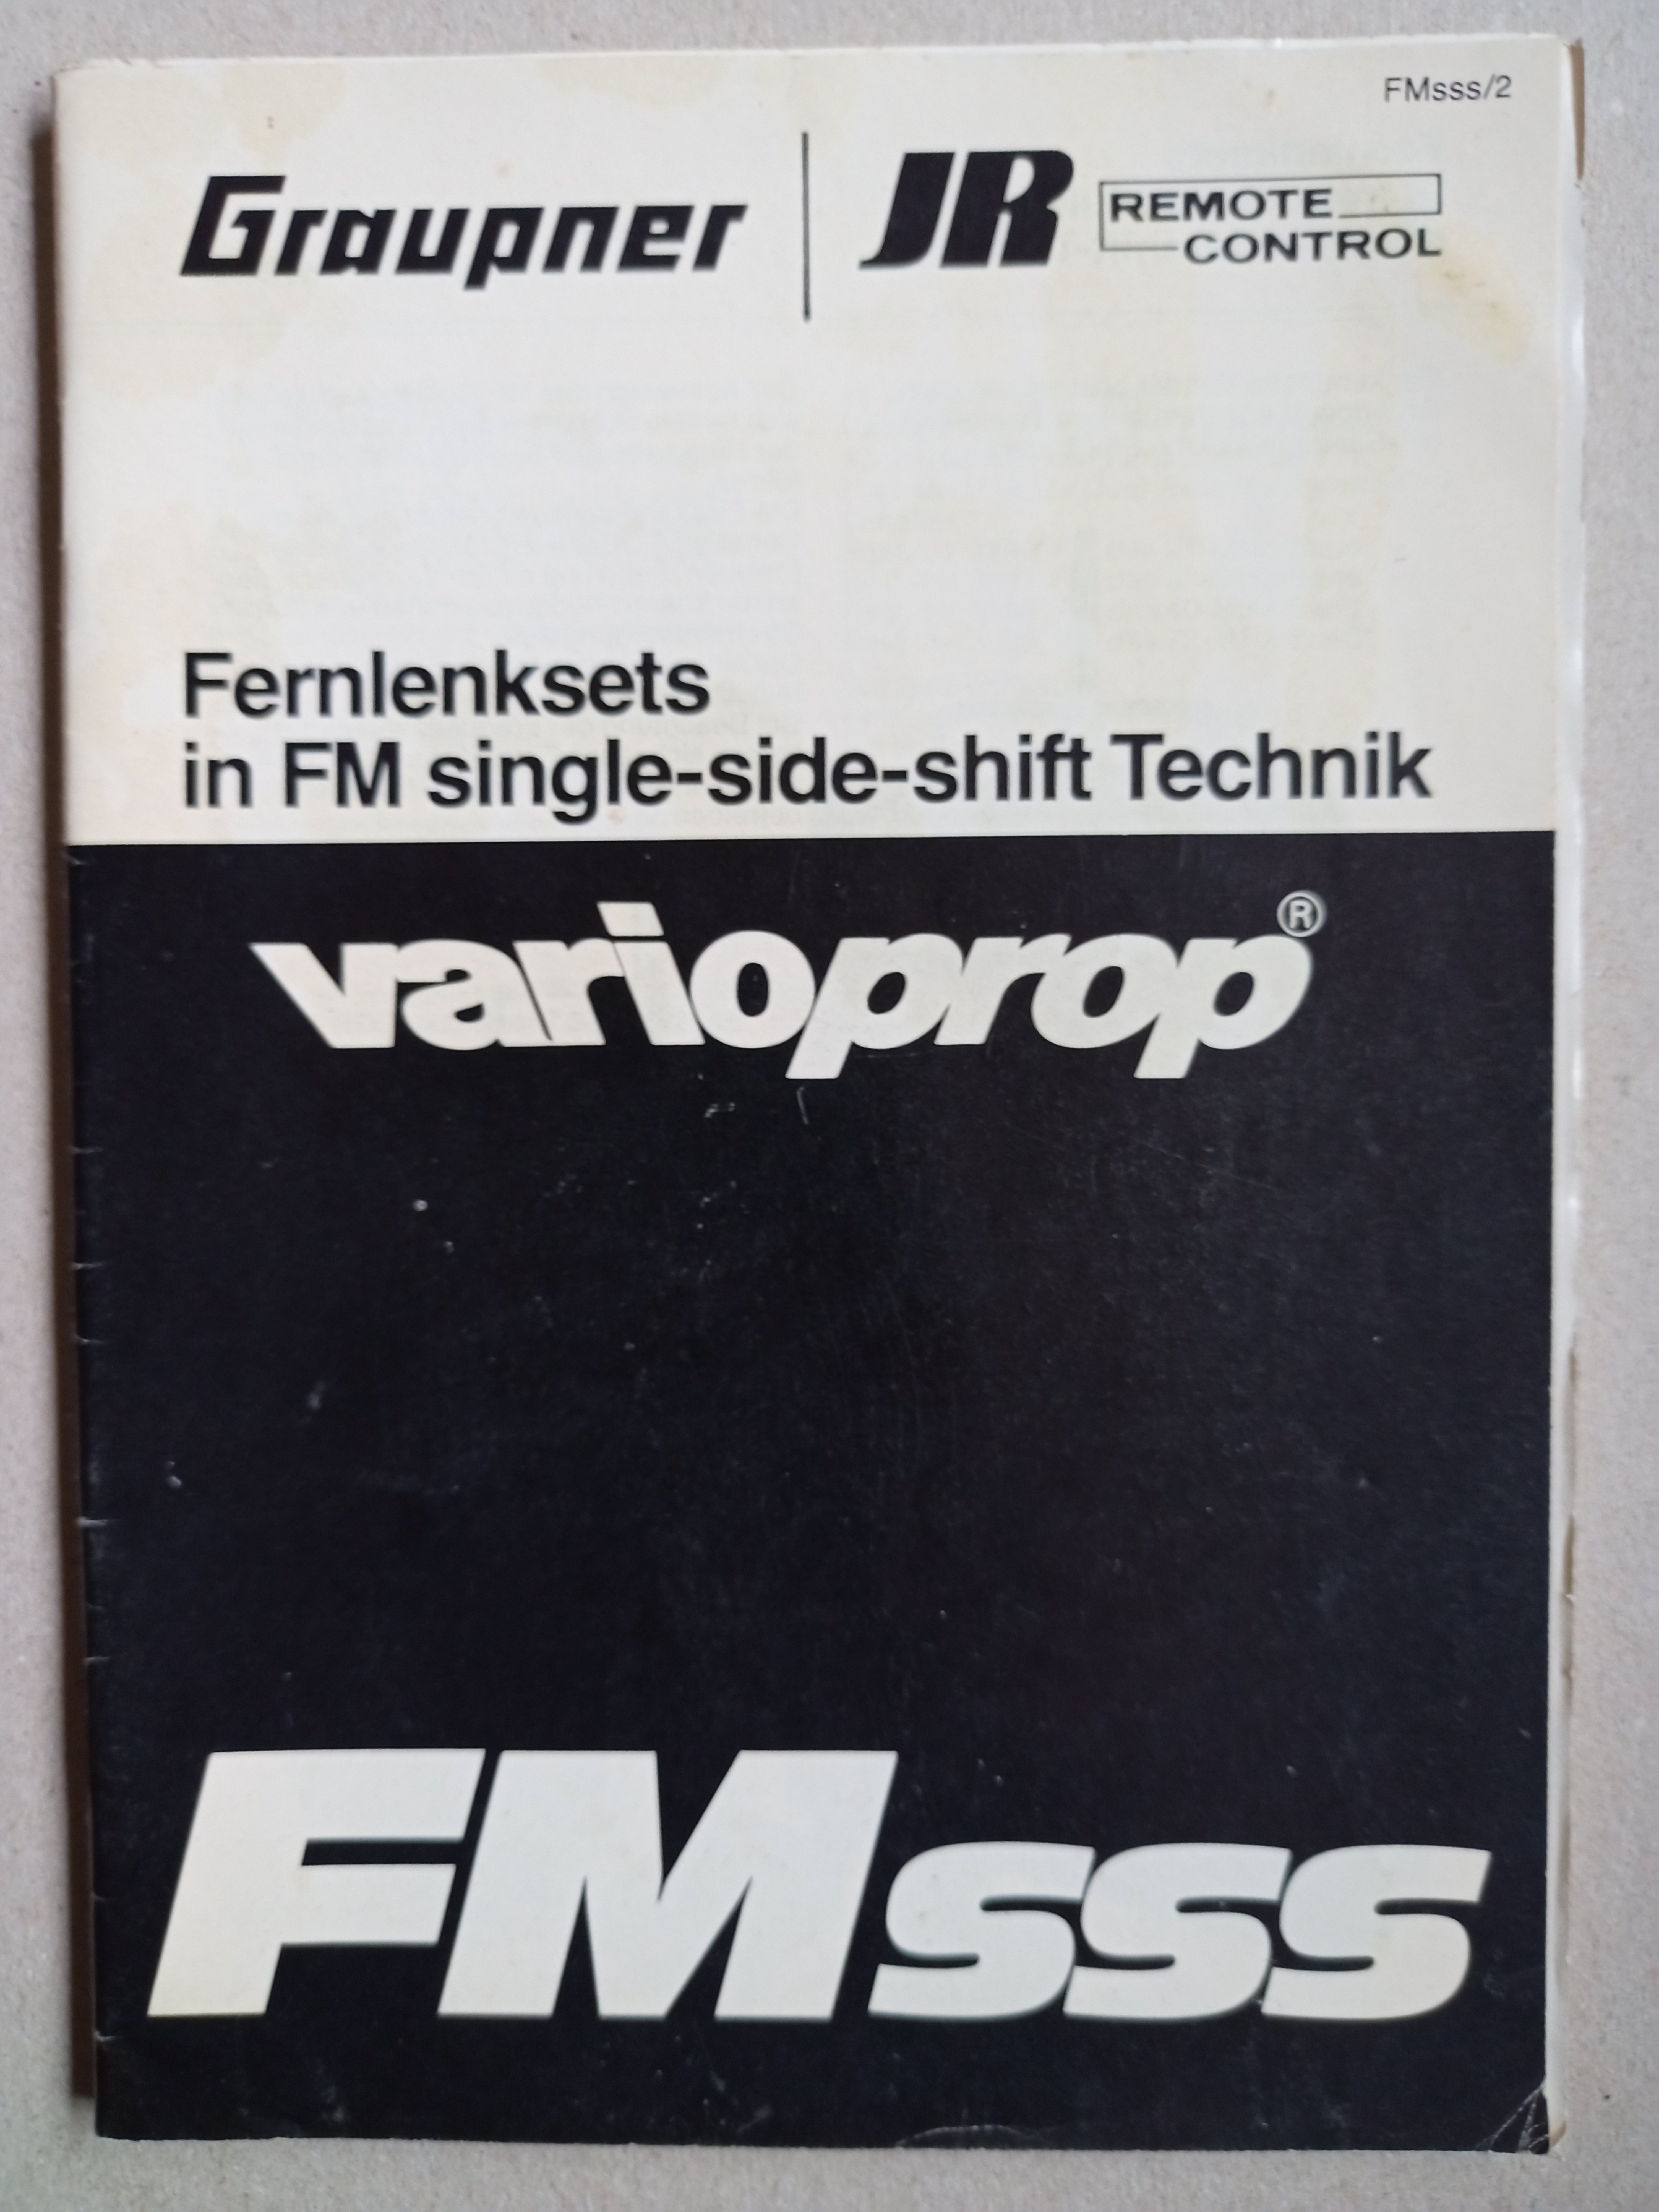 Graupner Prospekt FMsss/2 (Deutsches Segelflugmuseum mit Modellflug CC BY-NC-SA)